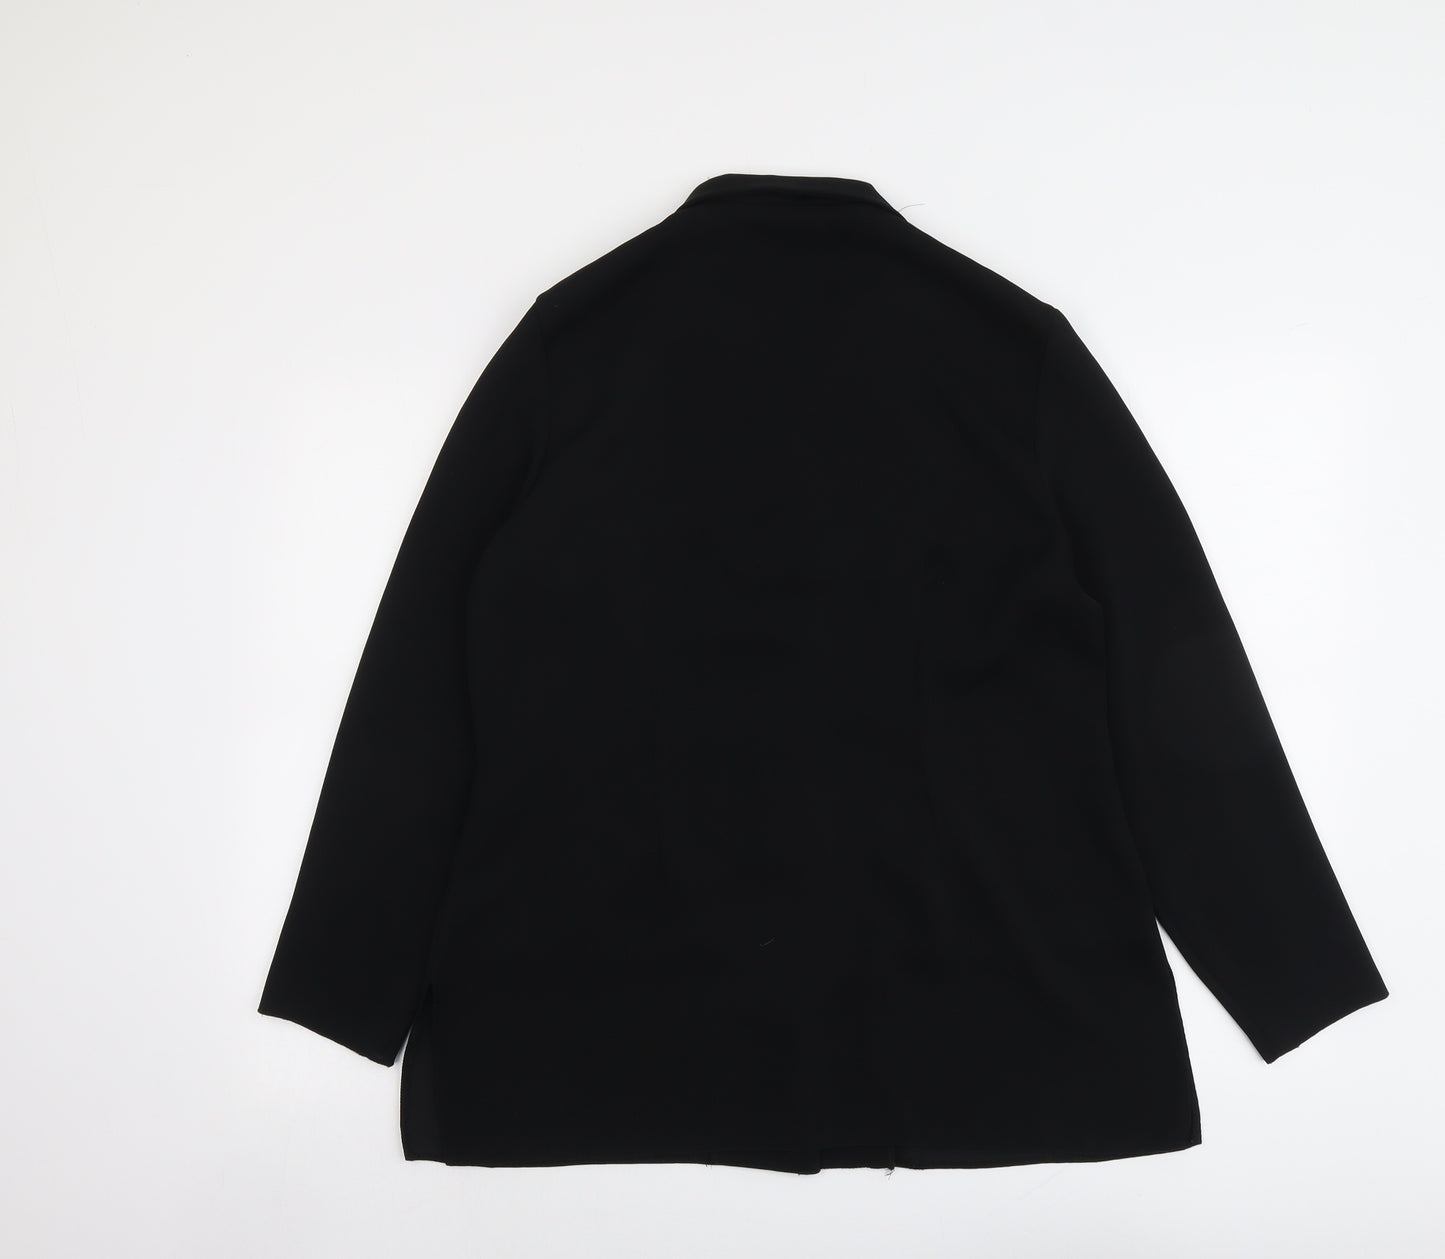 Etam Womens Black Jacket Size 14 Button